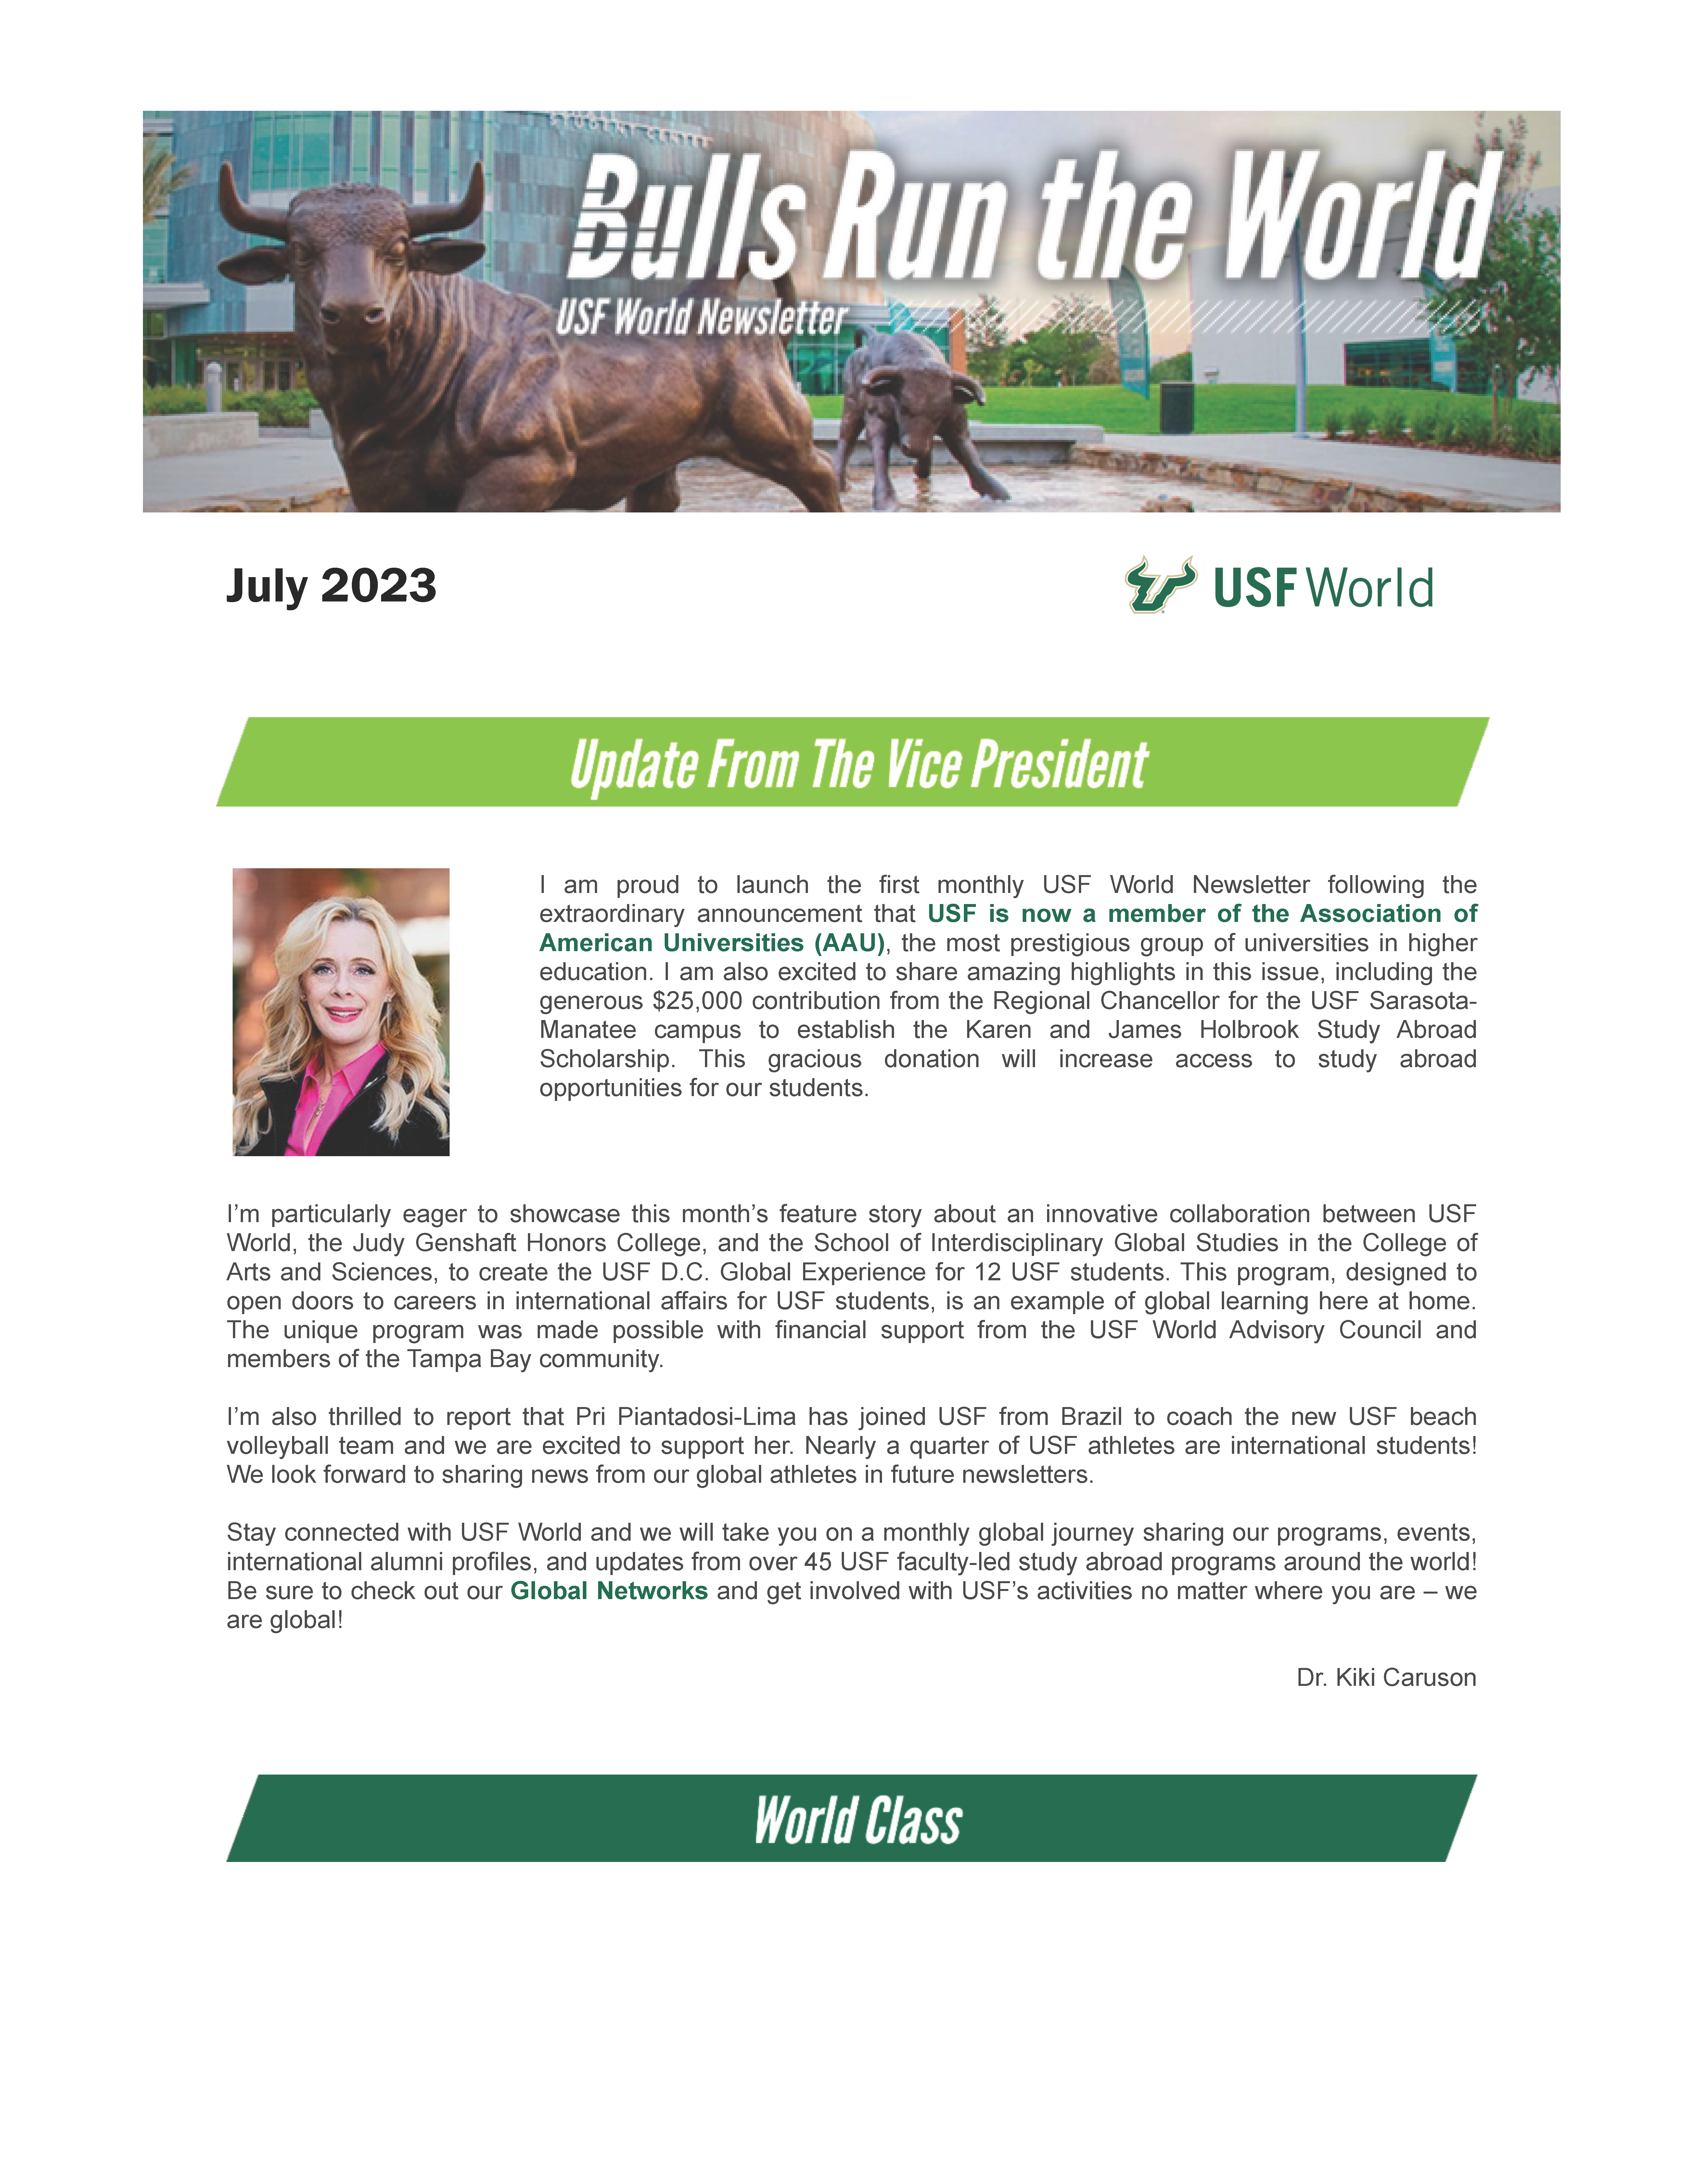 July 2023 Bulls Run the World newsletter